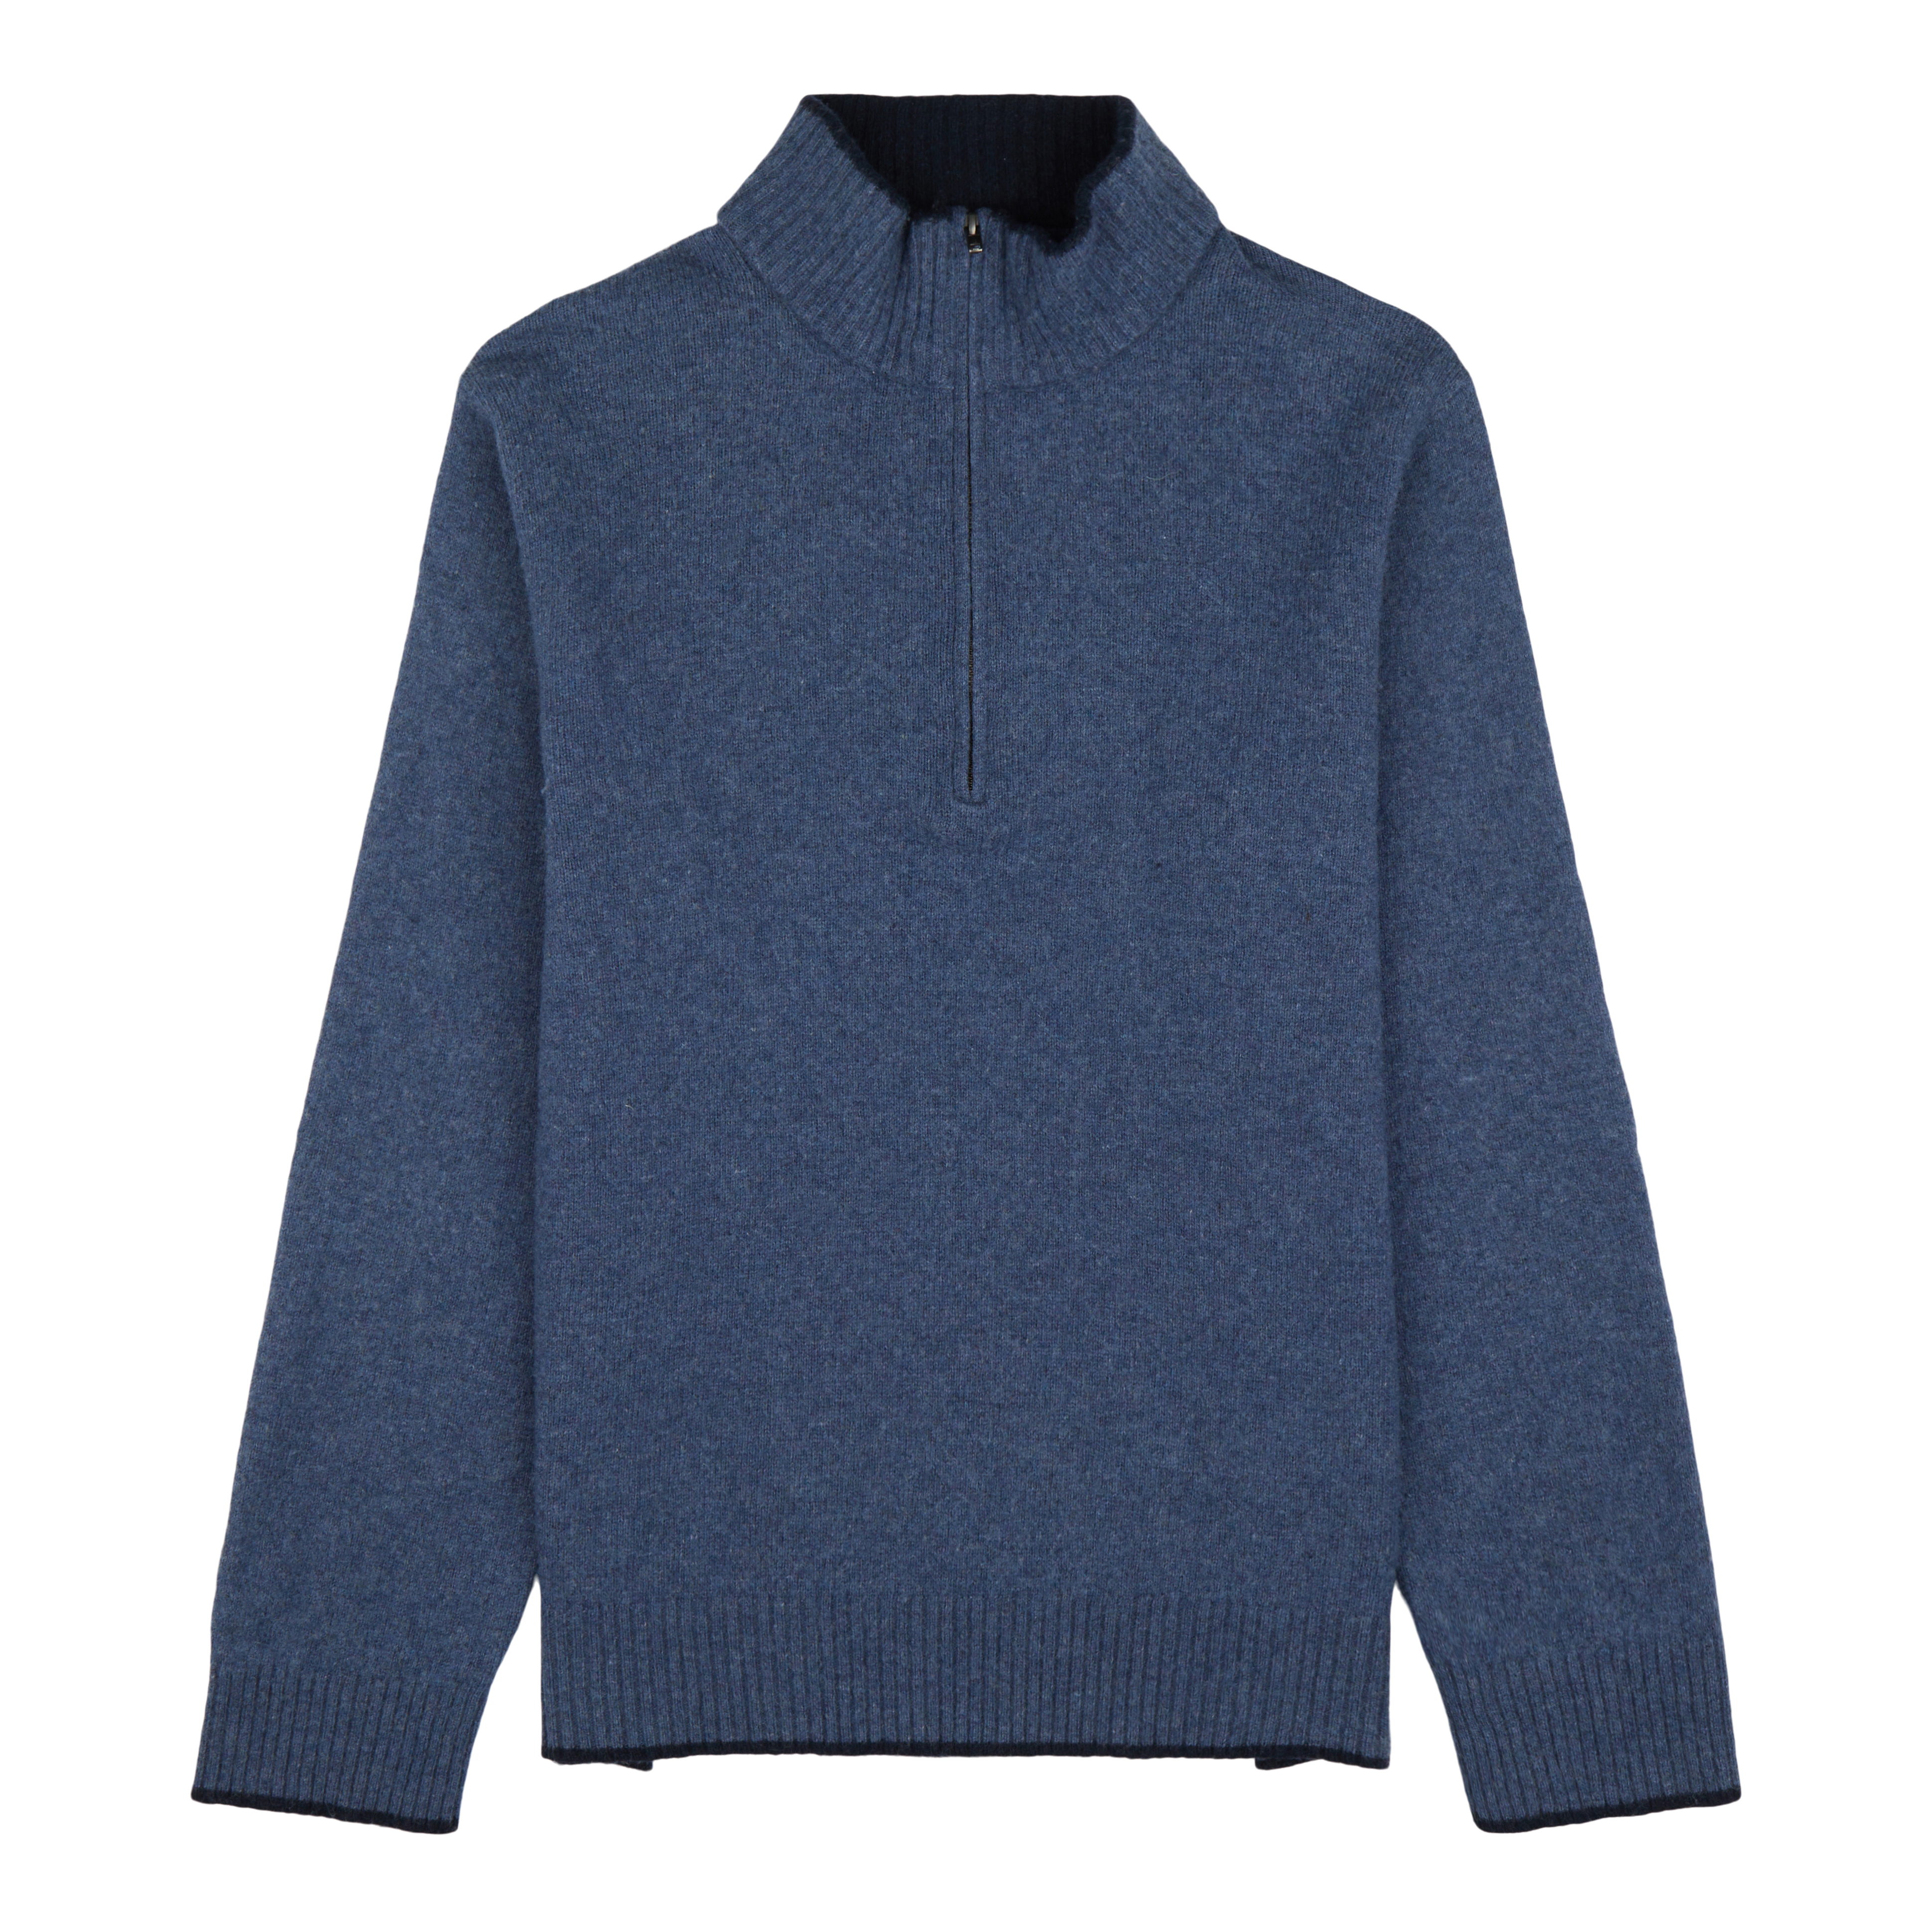 Patagonia Worn Wear Men's Merlow Wool 1/4-Zip Sweater Forge Grey